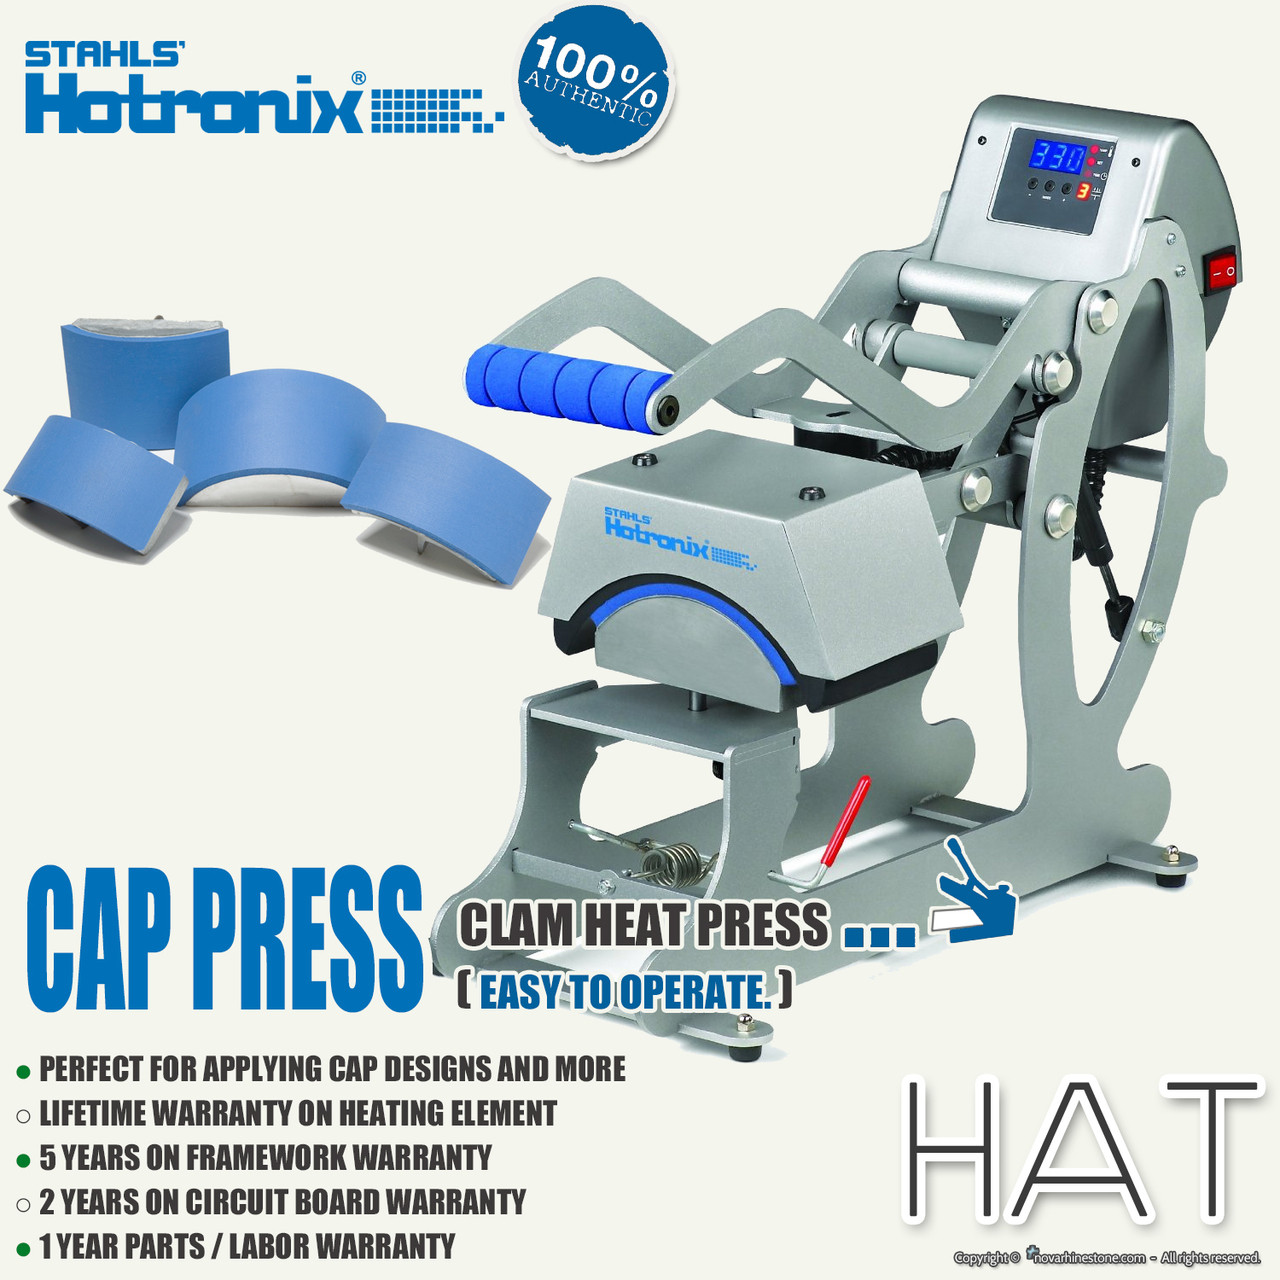 Hotronix® Auto Open Clam Heat Press